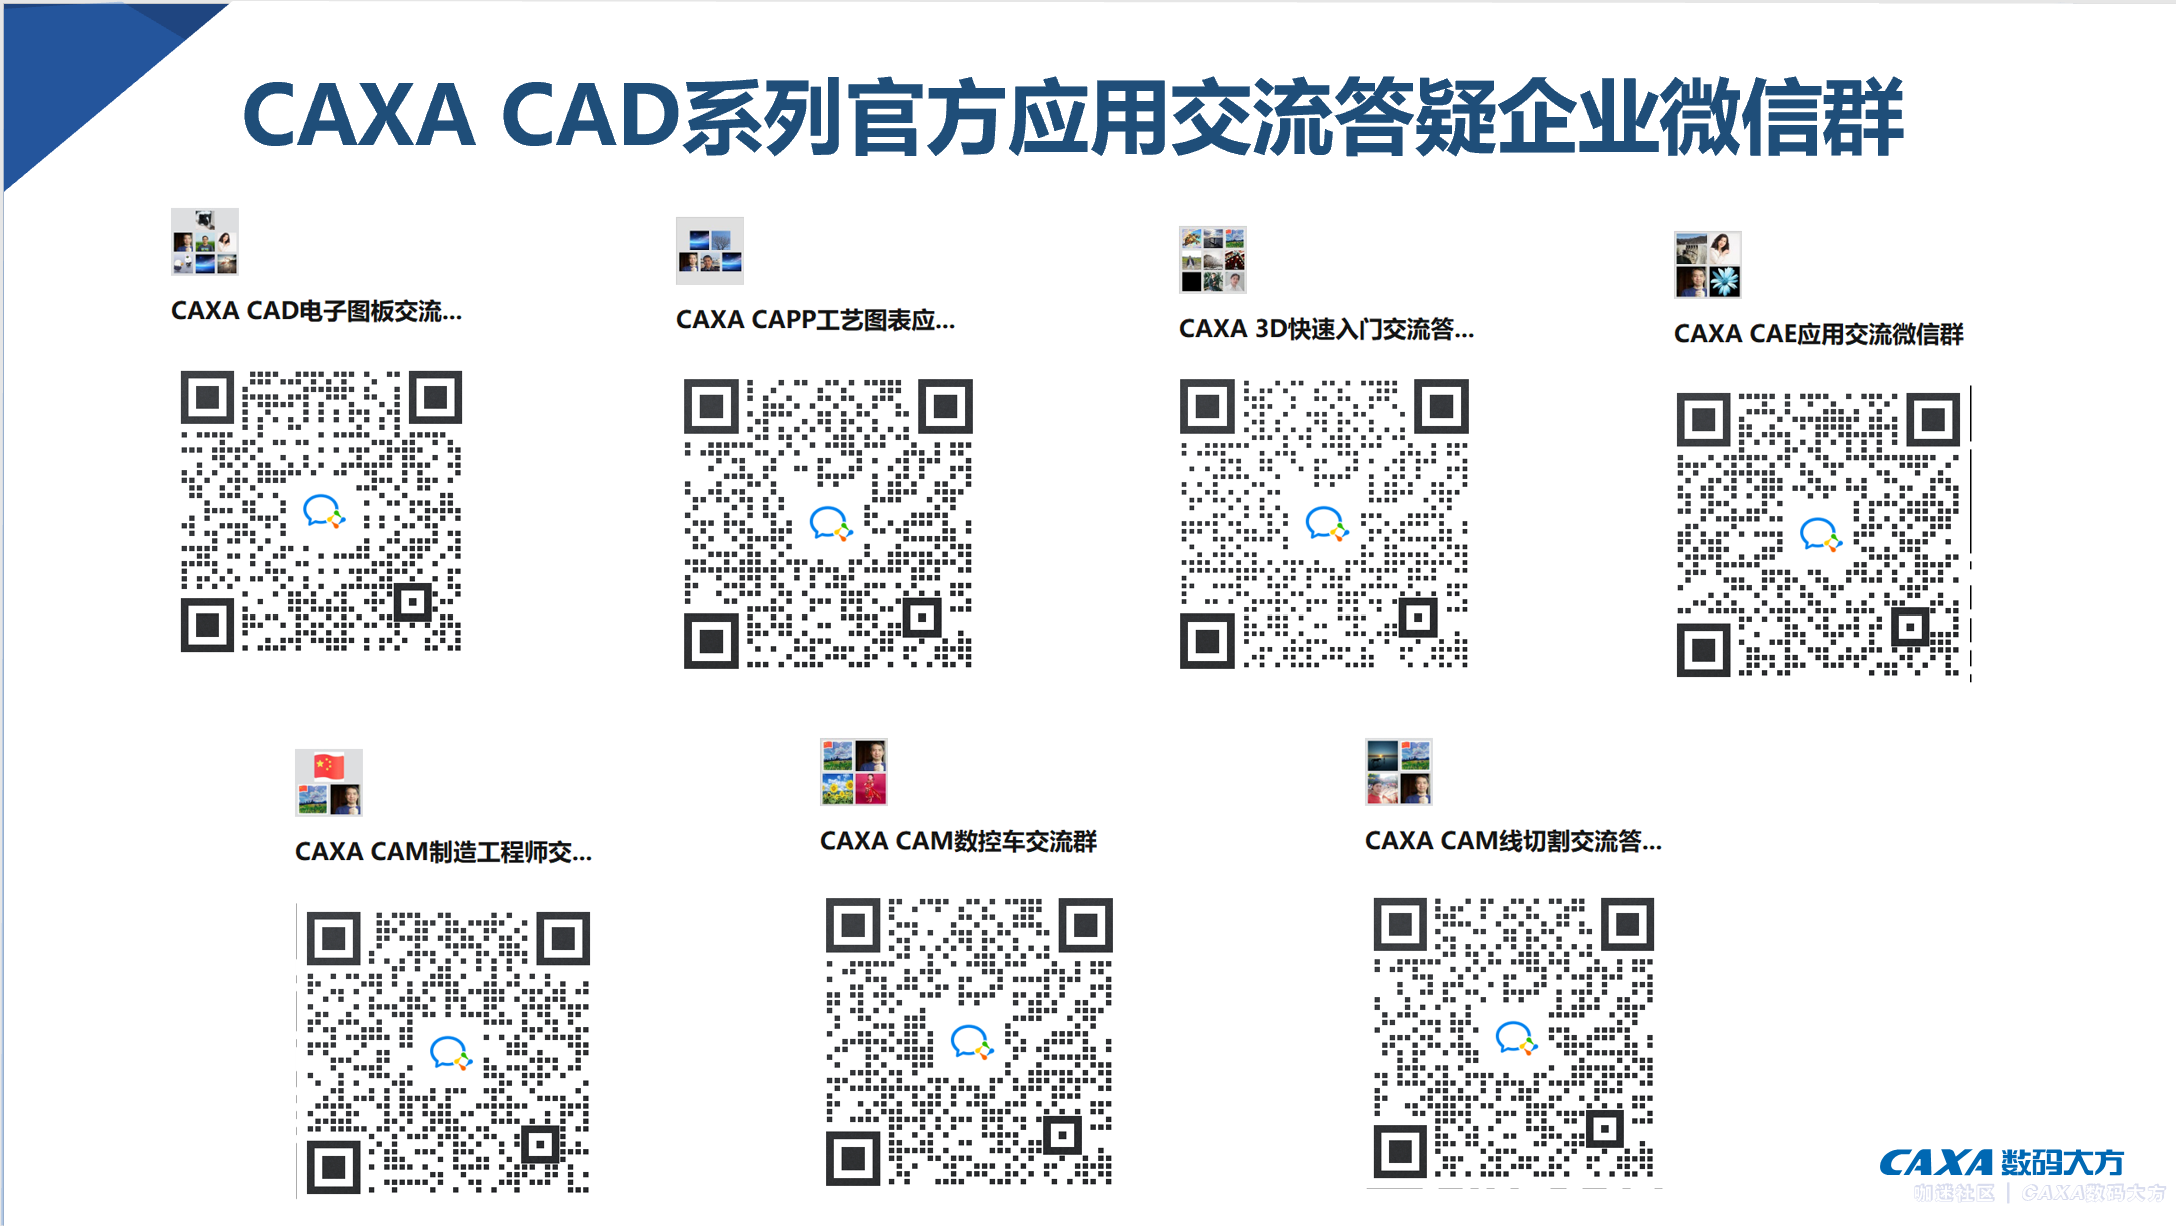 CAXA CAD系列官方应用交流答疑群.png